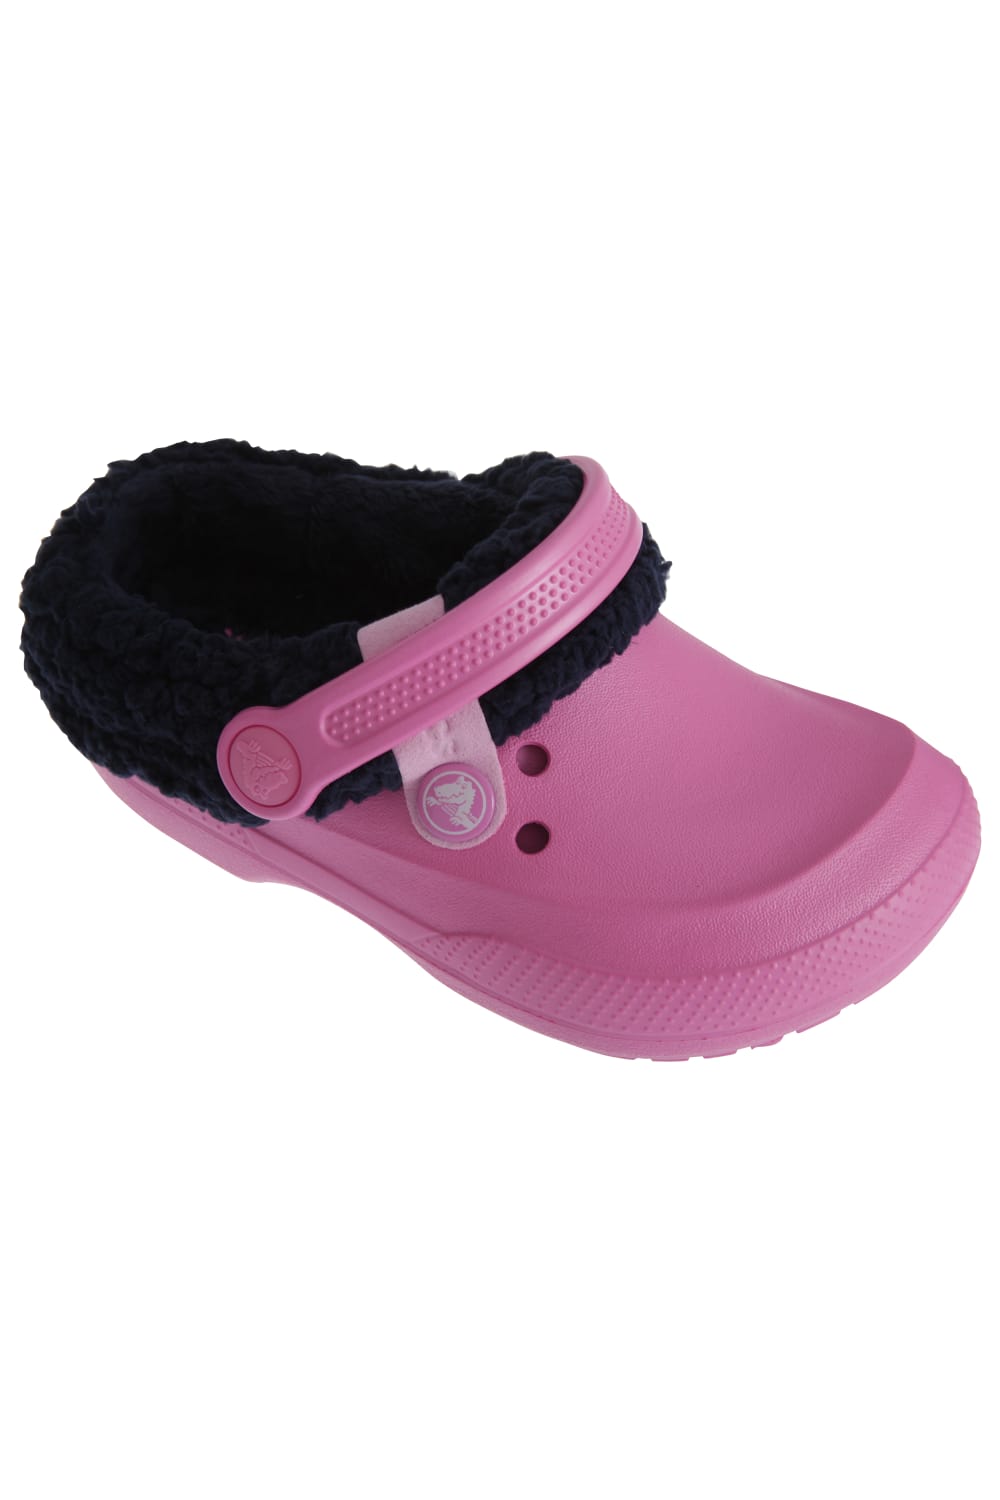 Crocs Blitzen II Kids Mules/Slip On Shoes (Pink)